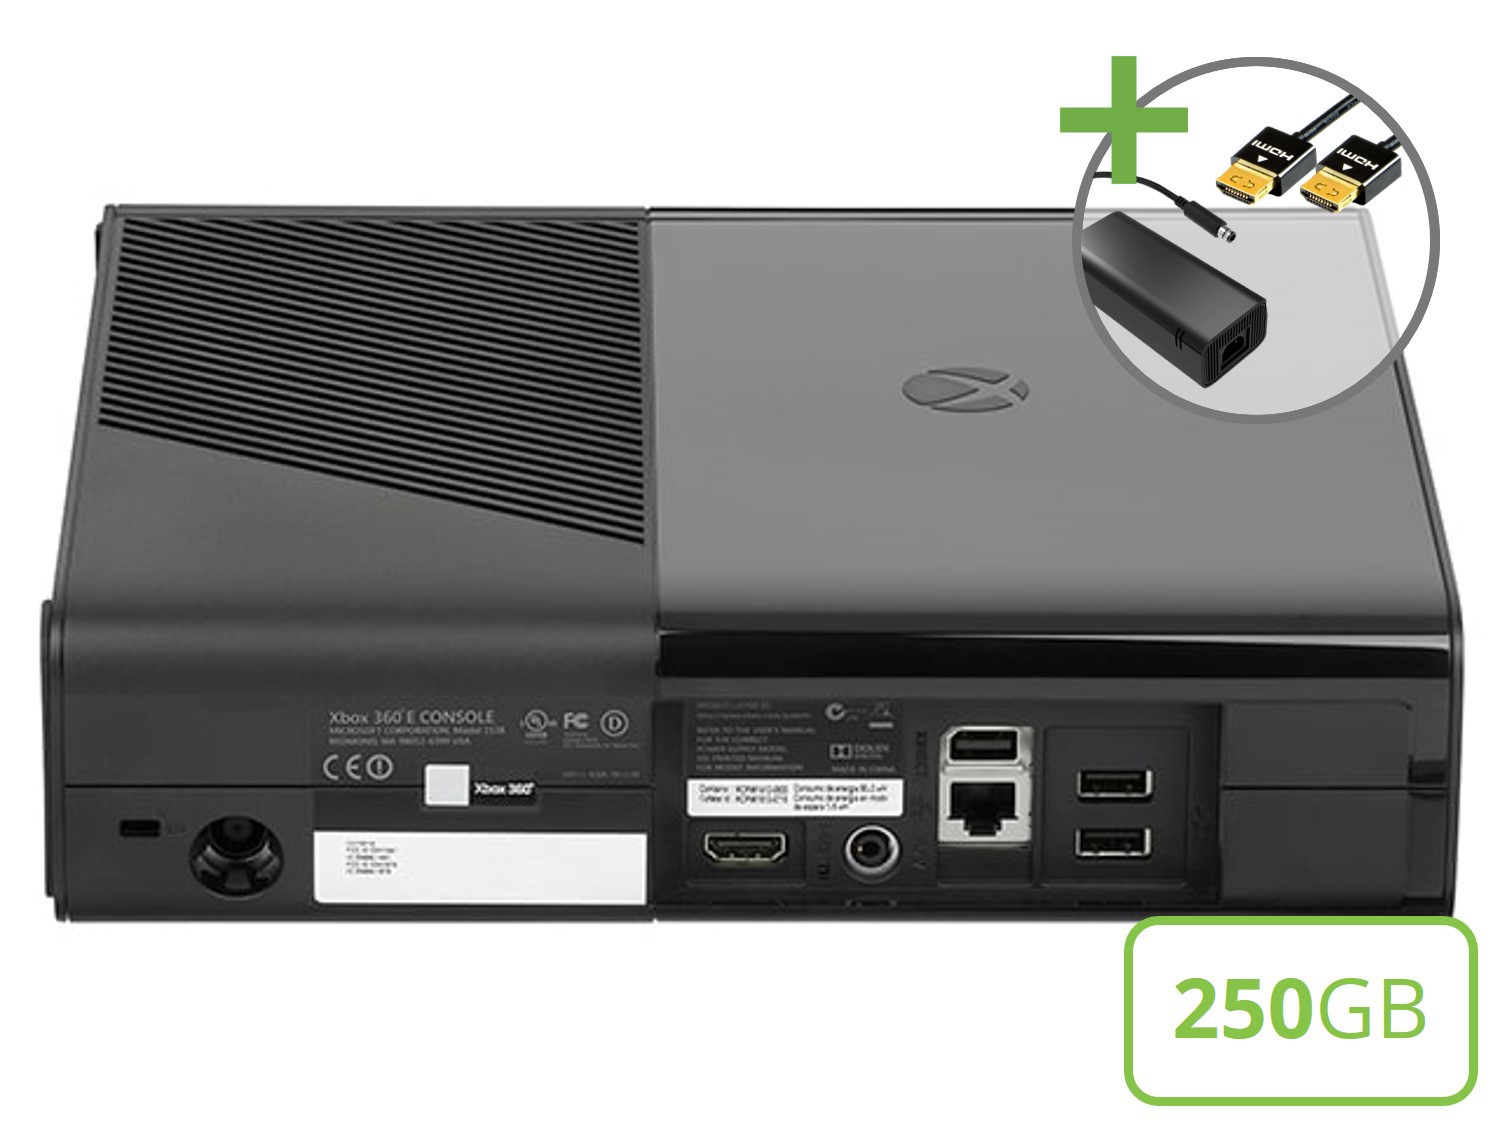 Microsoft Xbox 360 New Slim Starter Pack - 250GB Call of Duty Edition - Xbox 360 Hardware - 3